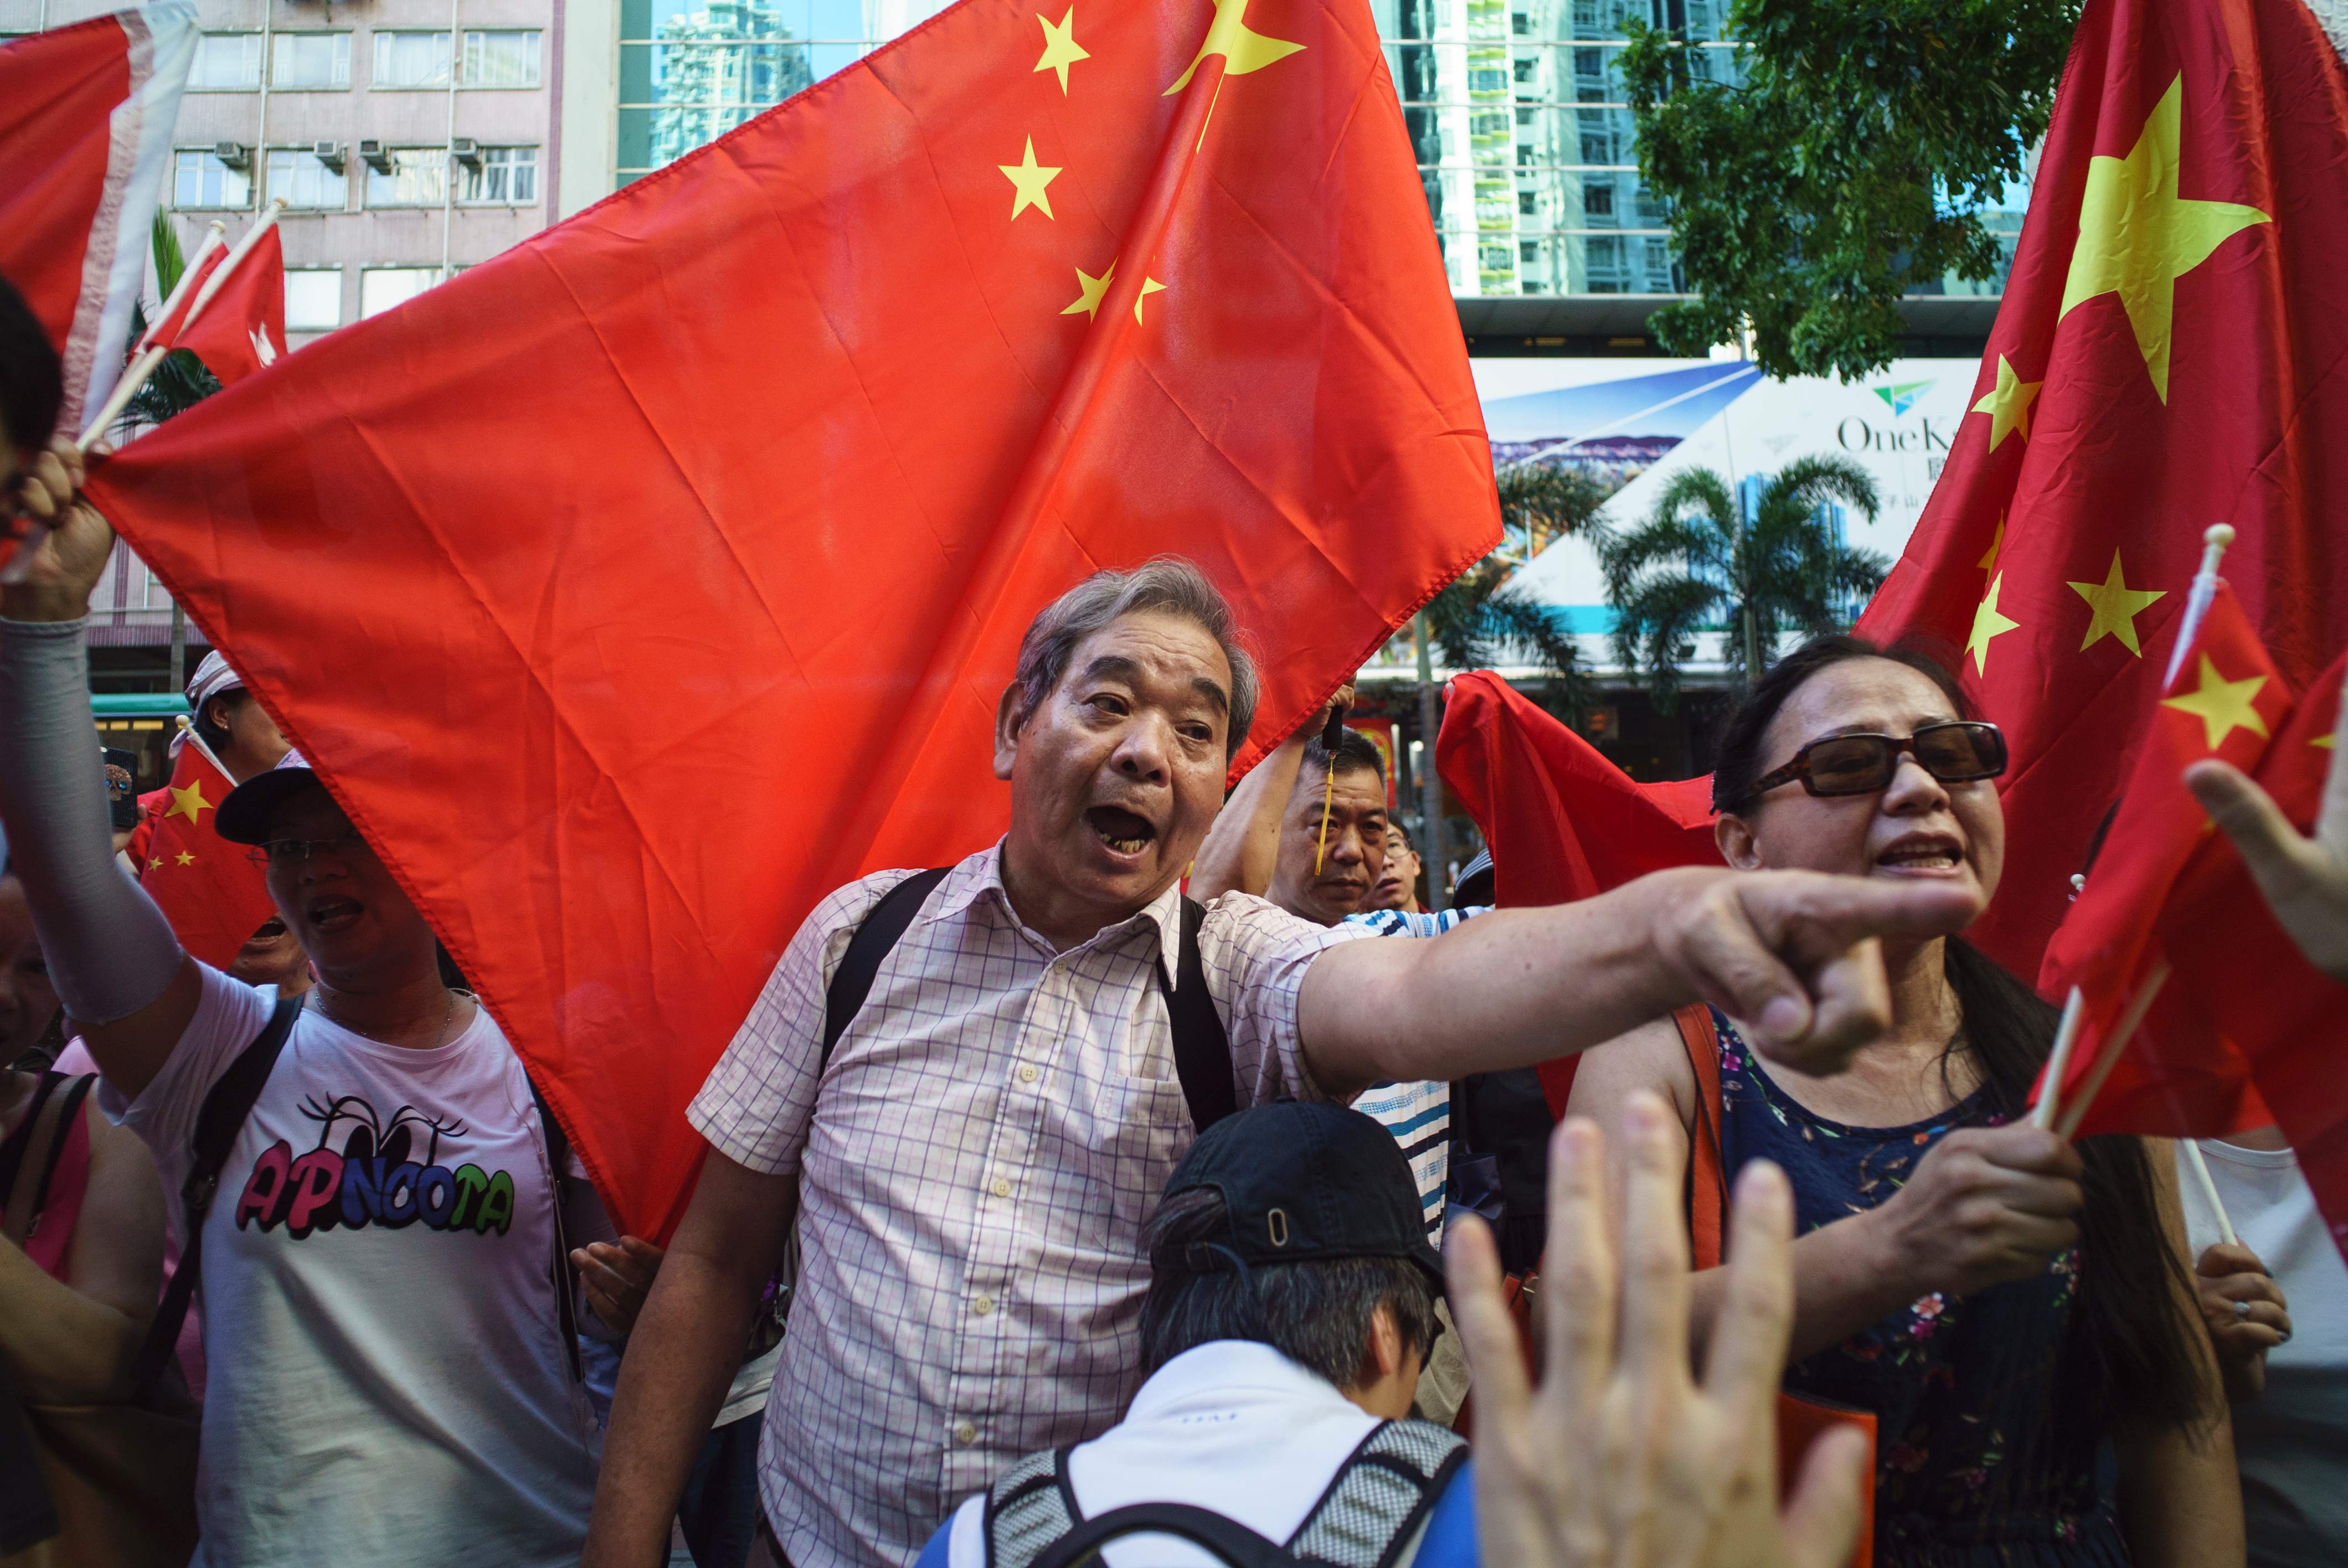 تظاهرات فى هونج كونج